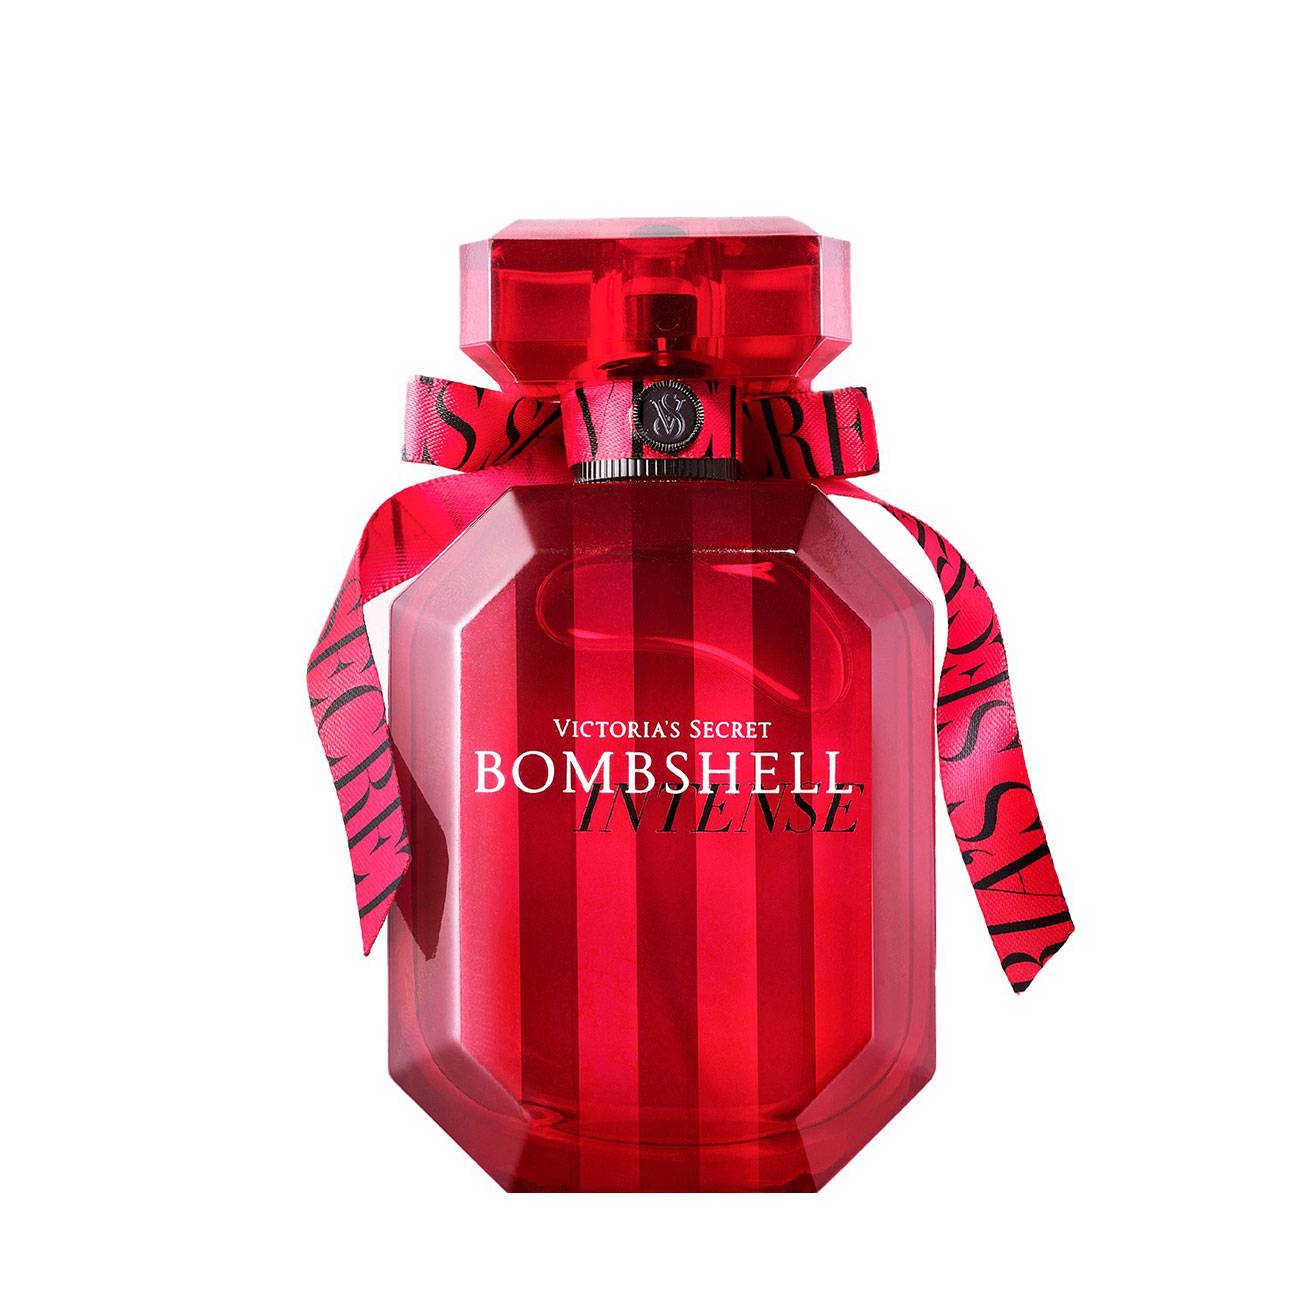 Apa de Parfum Victoria’s Secret BOMBSHELL INTENSE 100ml cu comanda online